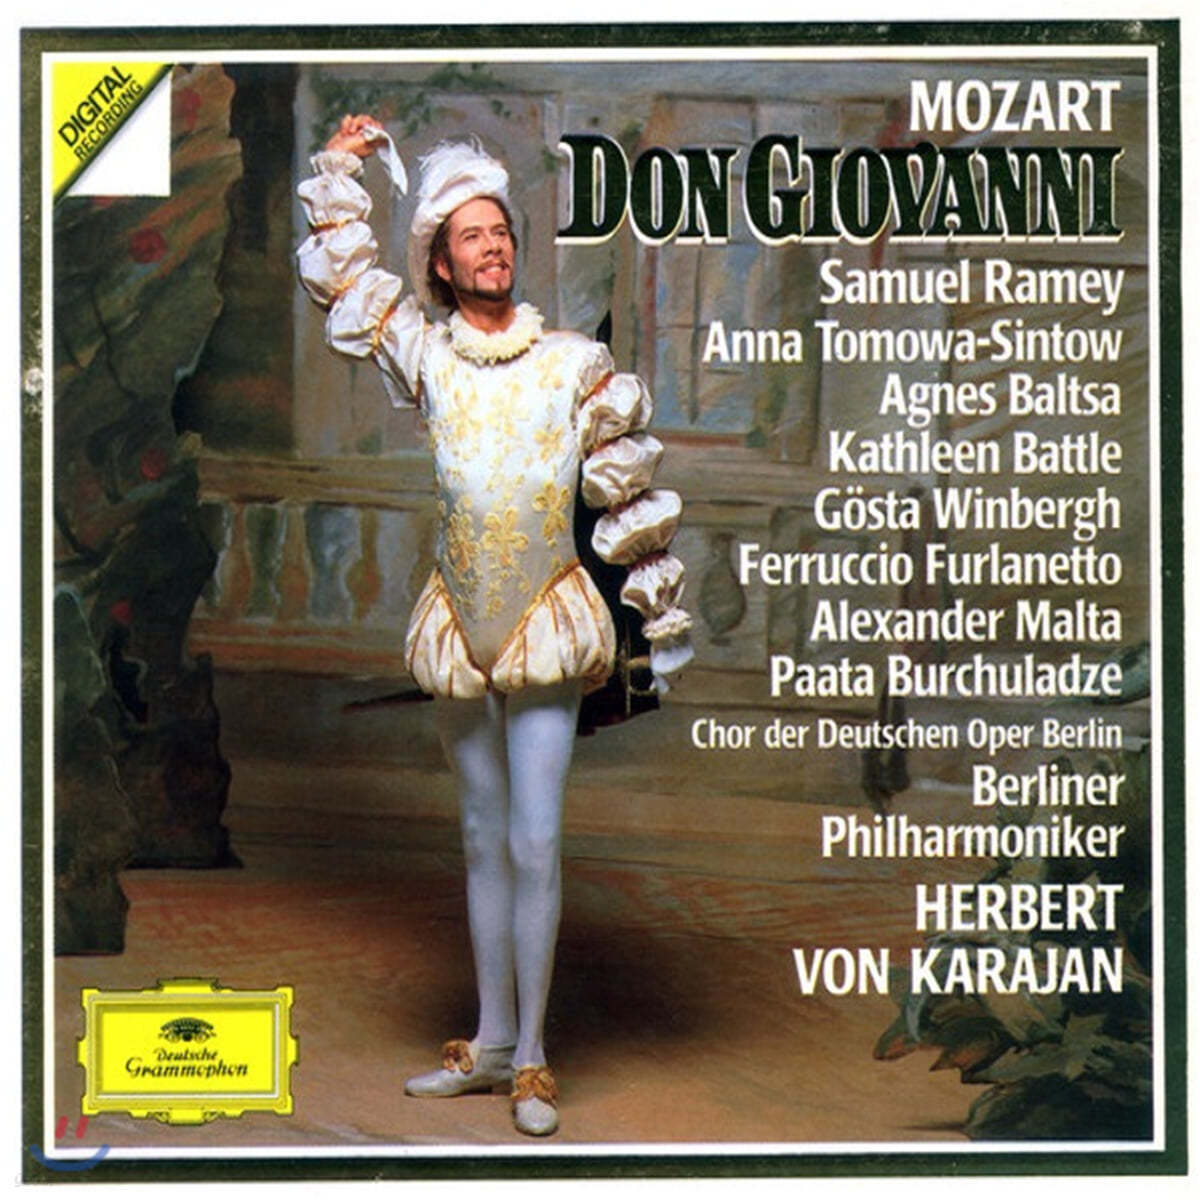 Herbert von Karajan 모차르트: 돈 지오반니 (Mozart: Don Giovanni)